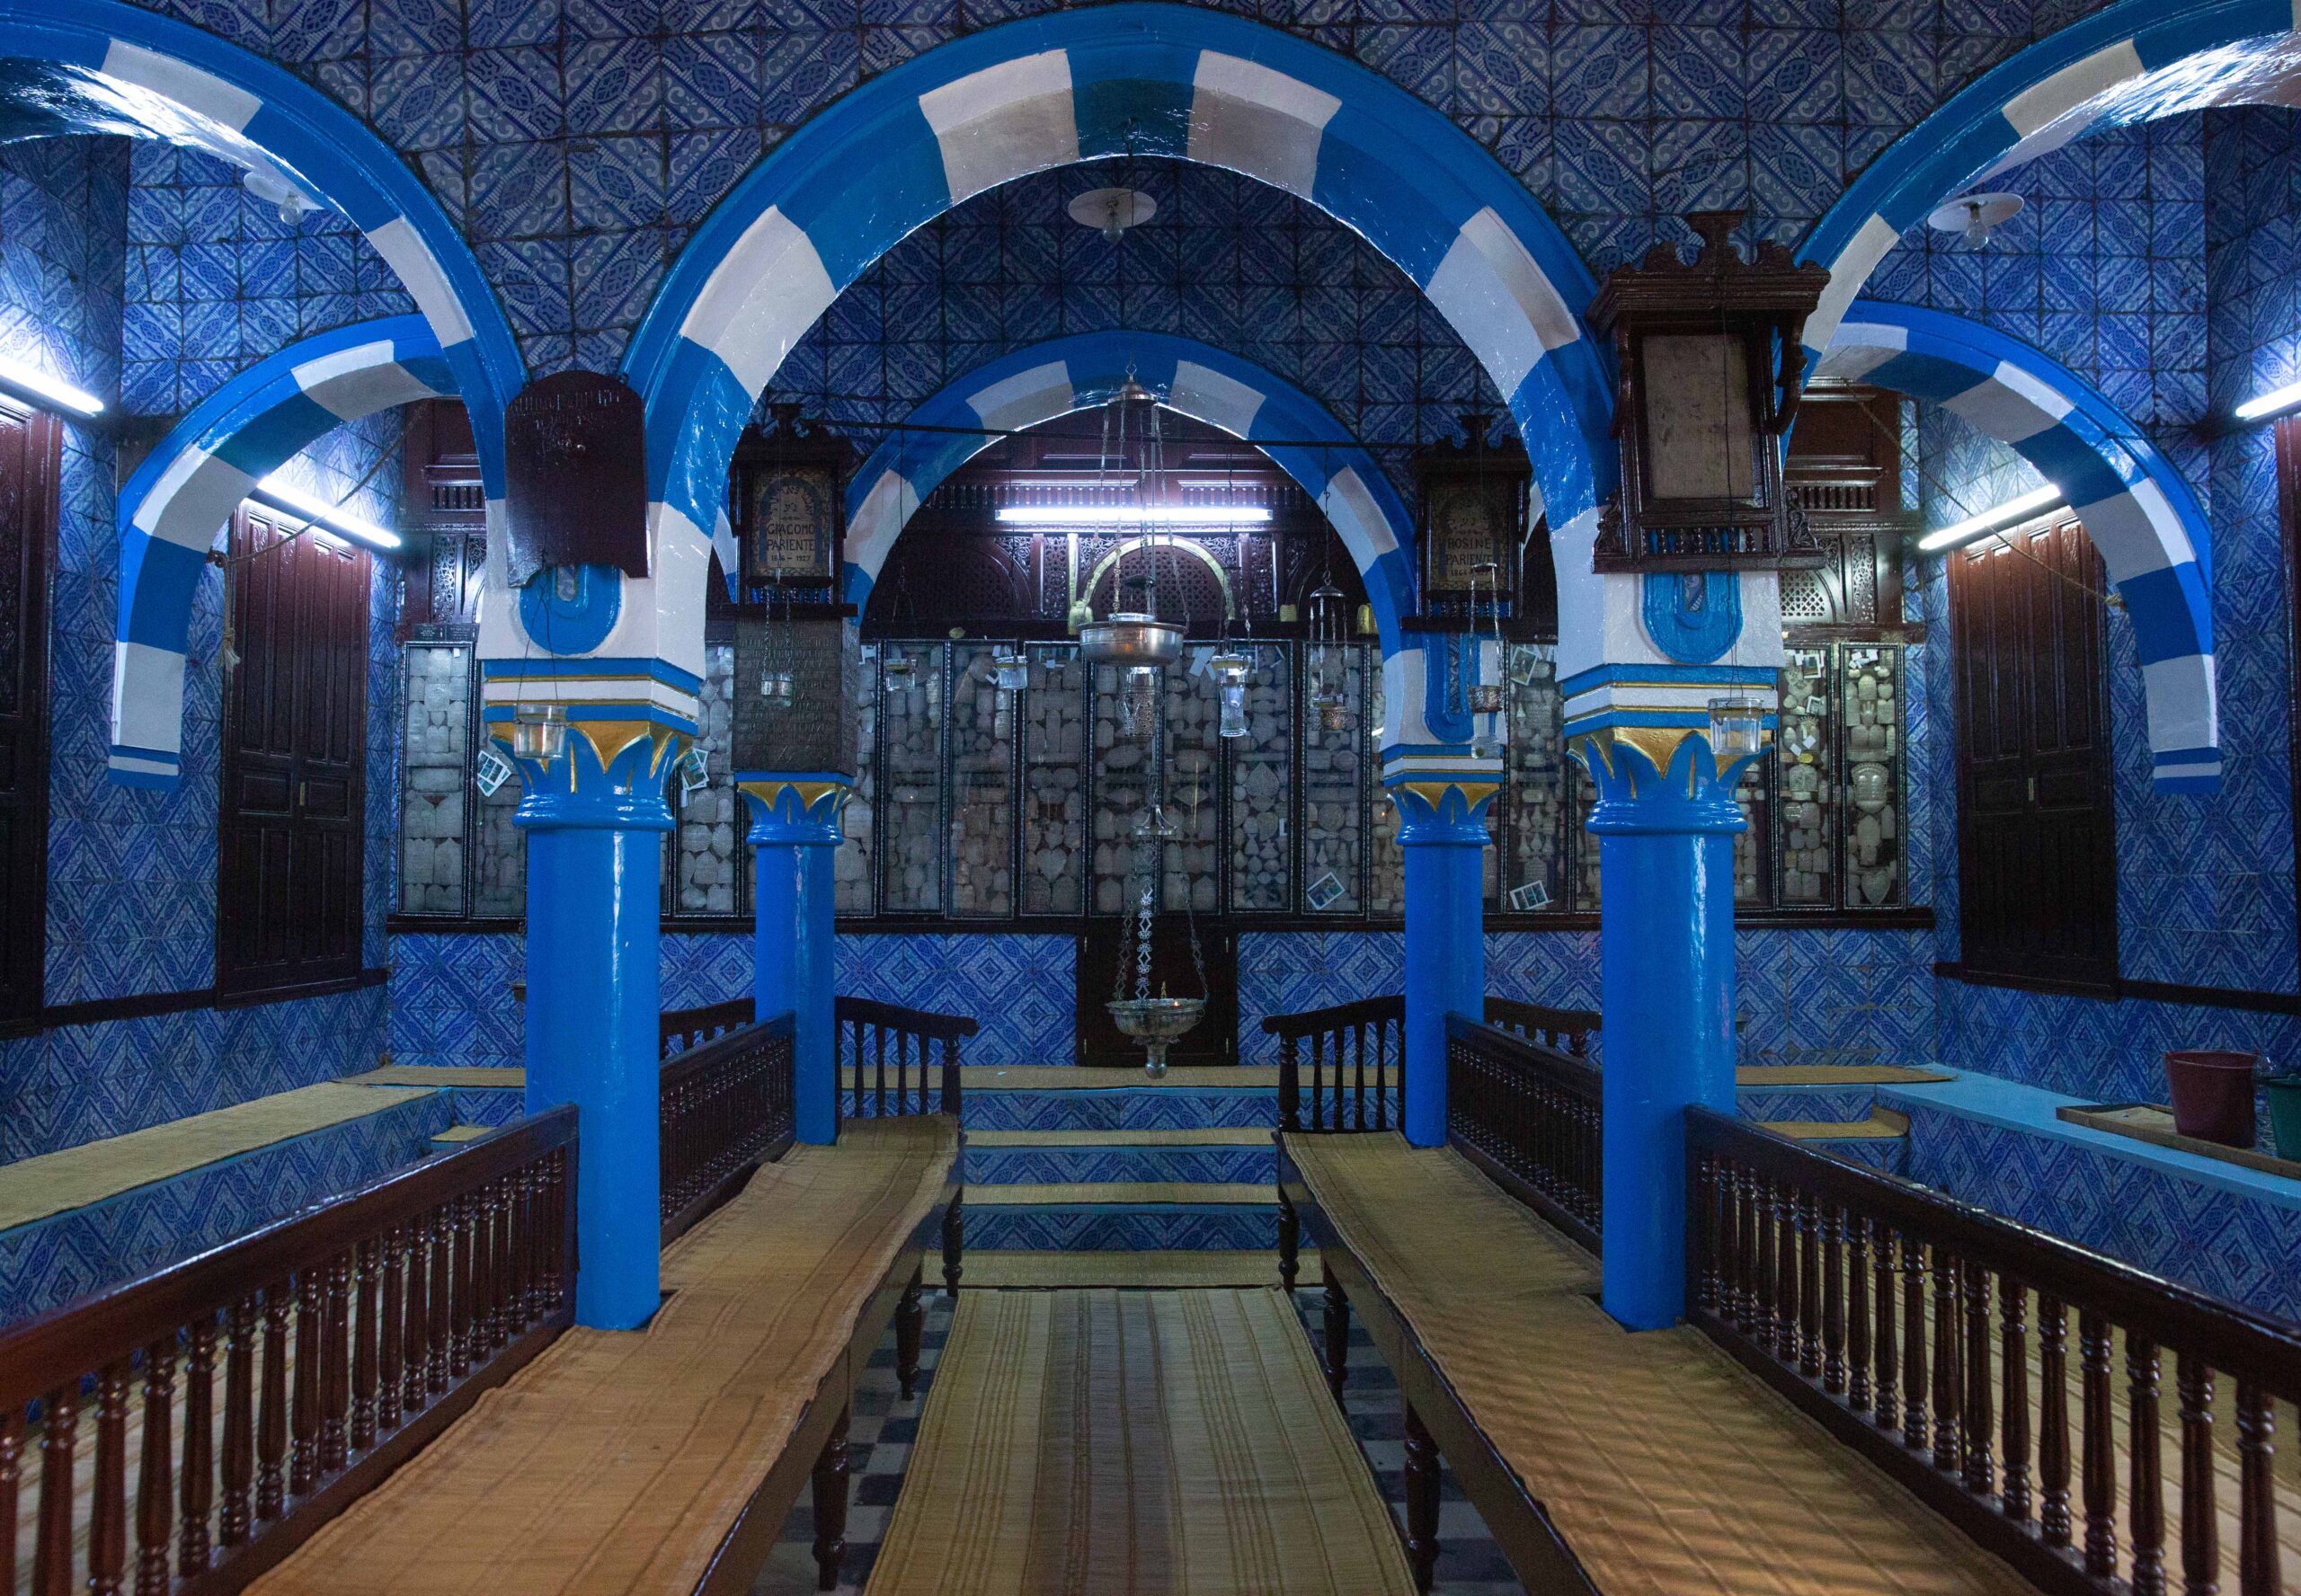 Ghriba synagogue, 19th century, Djerba, Tunisia (photo: Ariel Fein, CC BY-NC-SA 2.0)